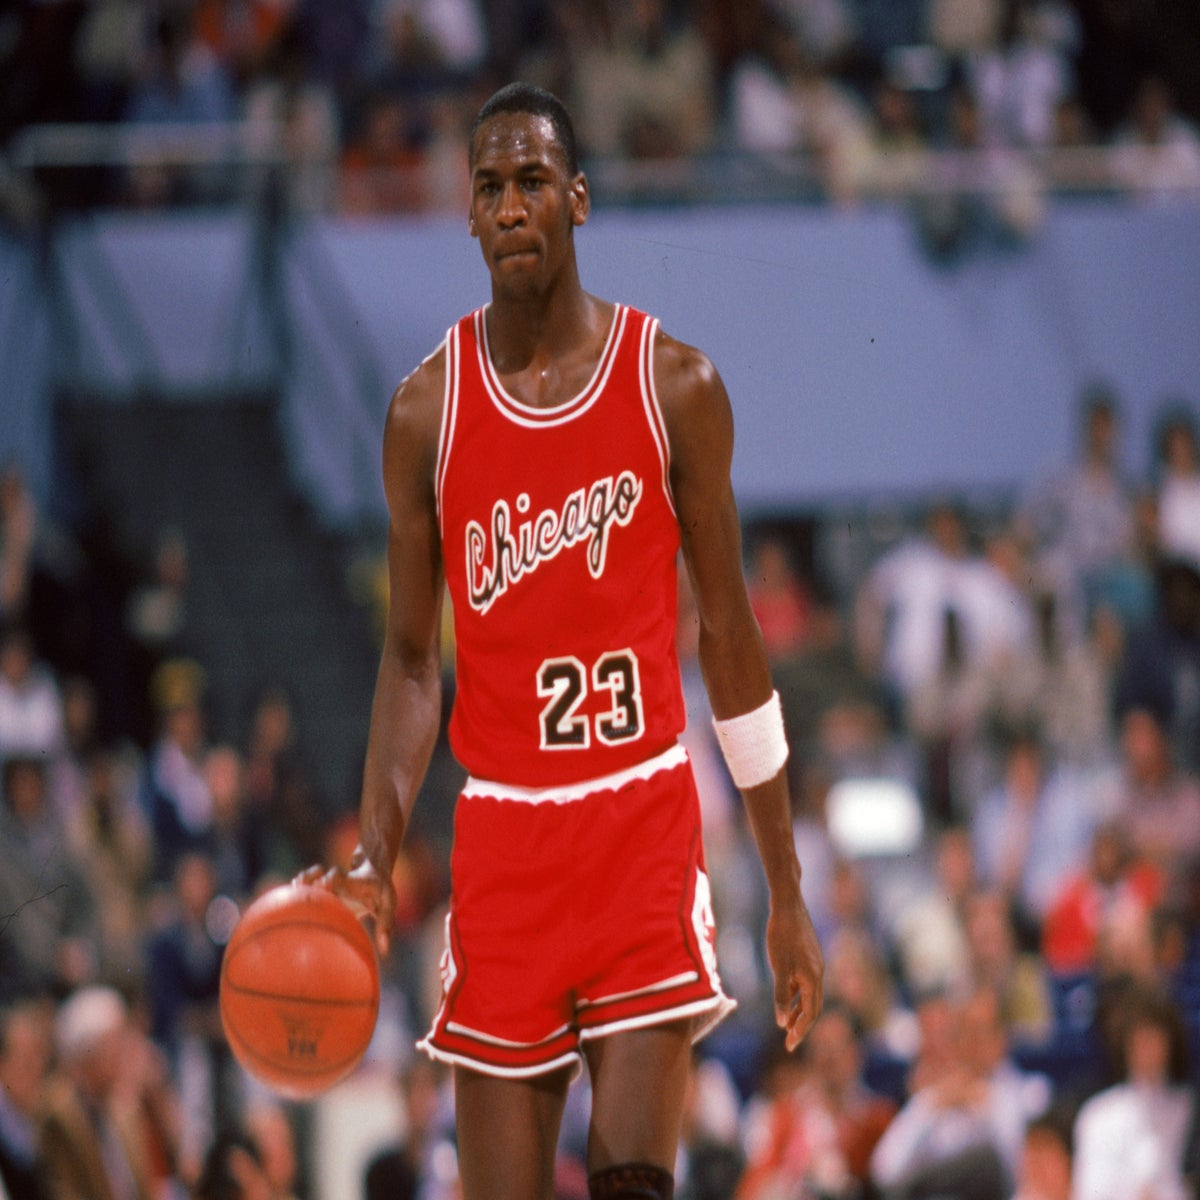 Michael Jordan's 'Dream team' jacket is up for auction